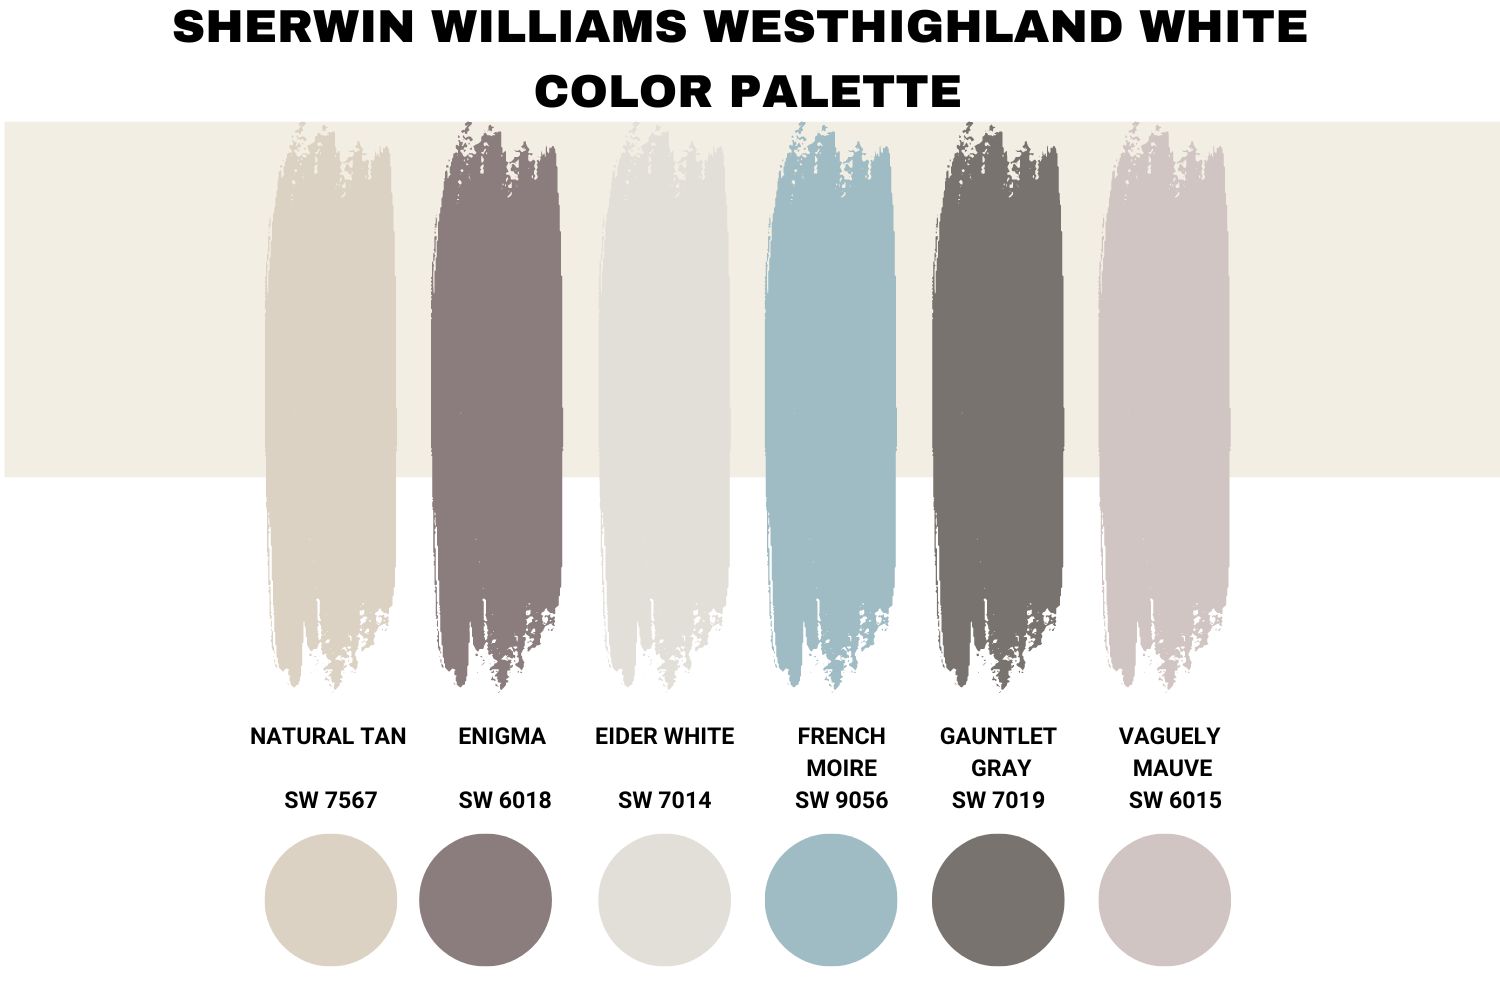 Sherwin Williams Vaguely Mauve SW 6015